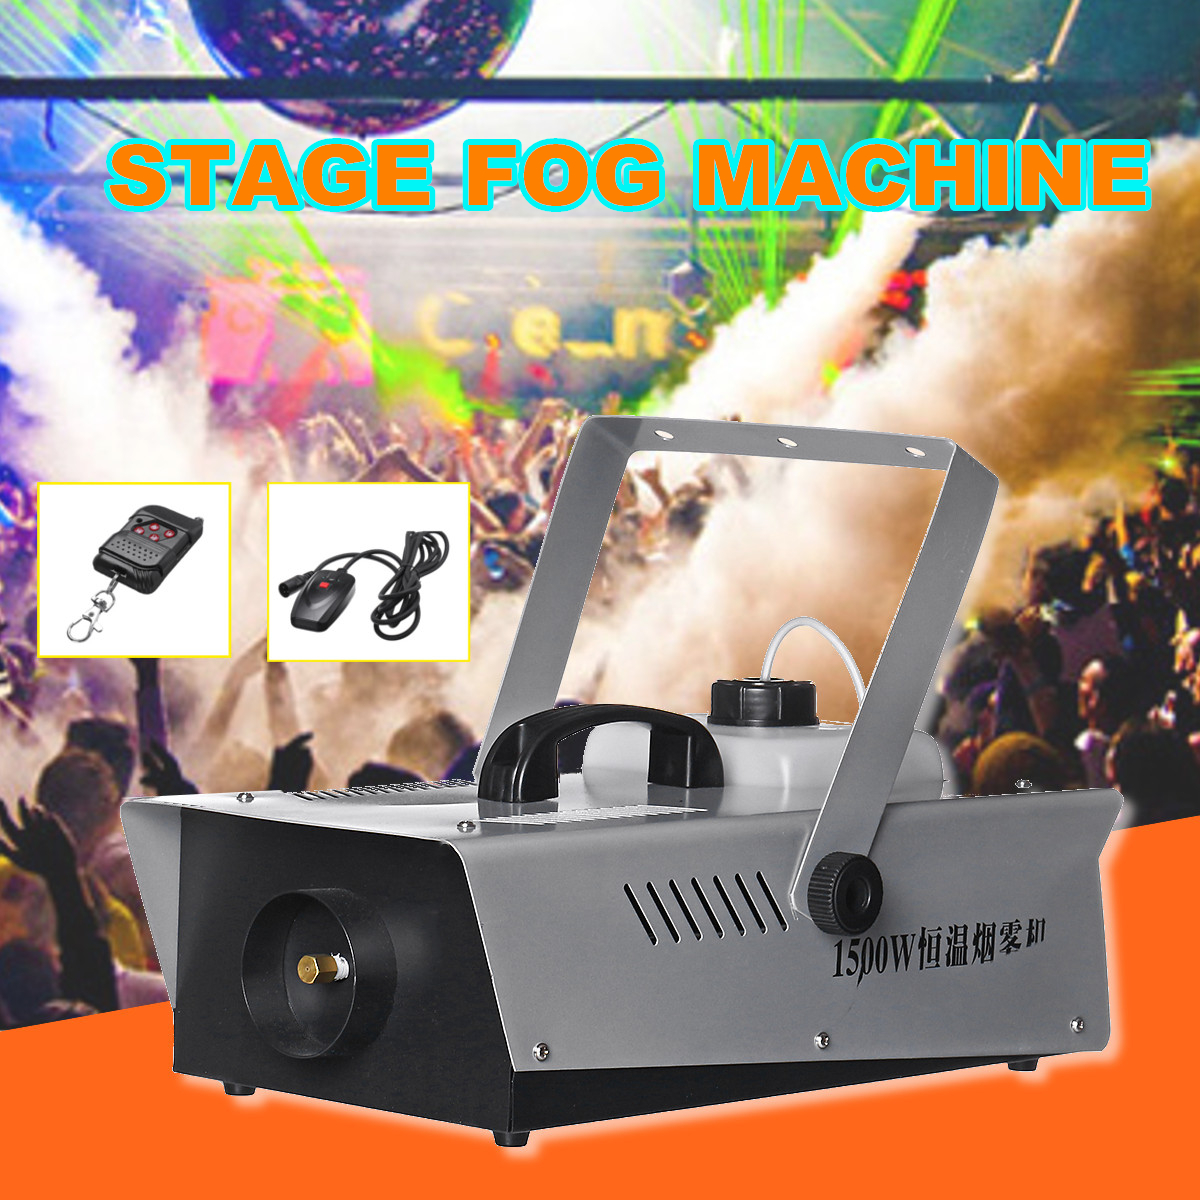 1500W-220V-Stage-Fog-Smoke-Machine-Fogger-Wireless-Remote-No-Light-for-Wedding-Party-1537479-1